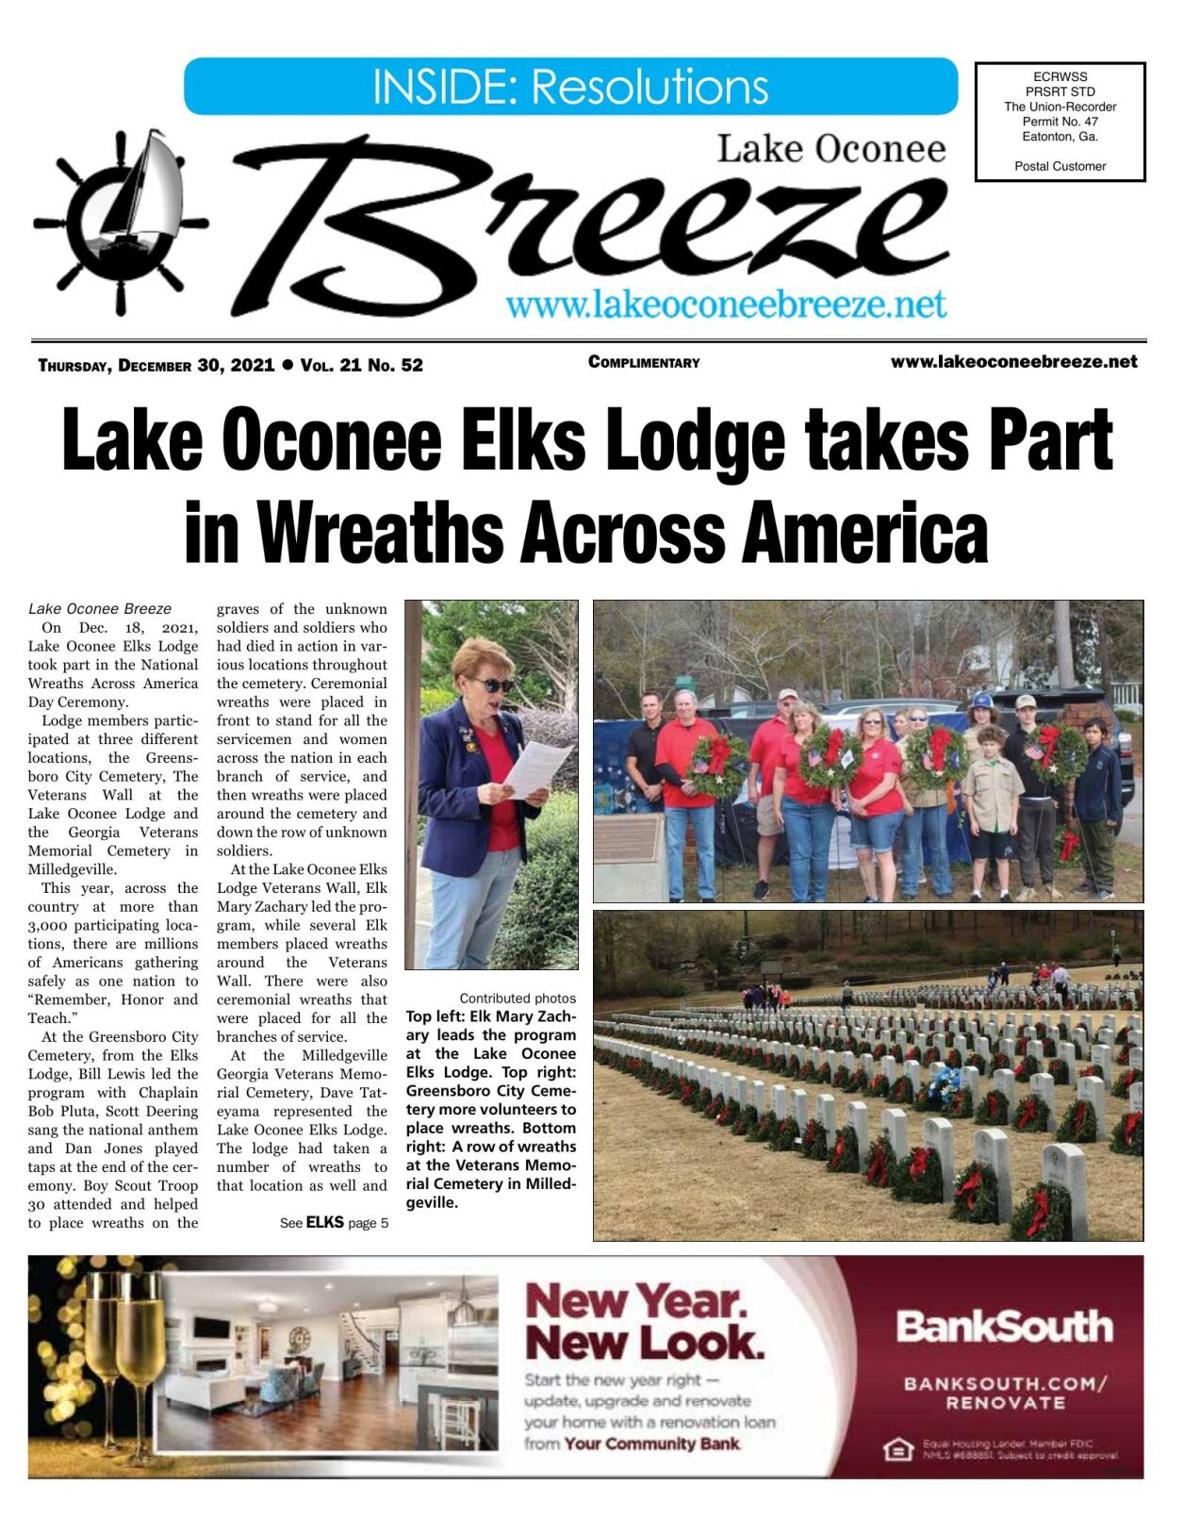 Lake Oconee Breeze, Dec. 30, 2021